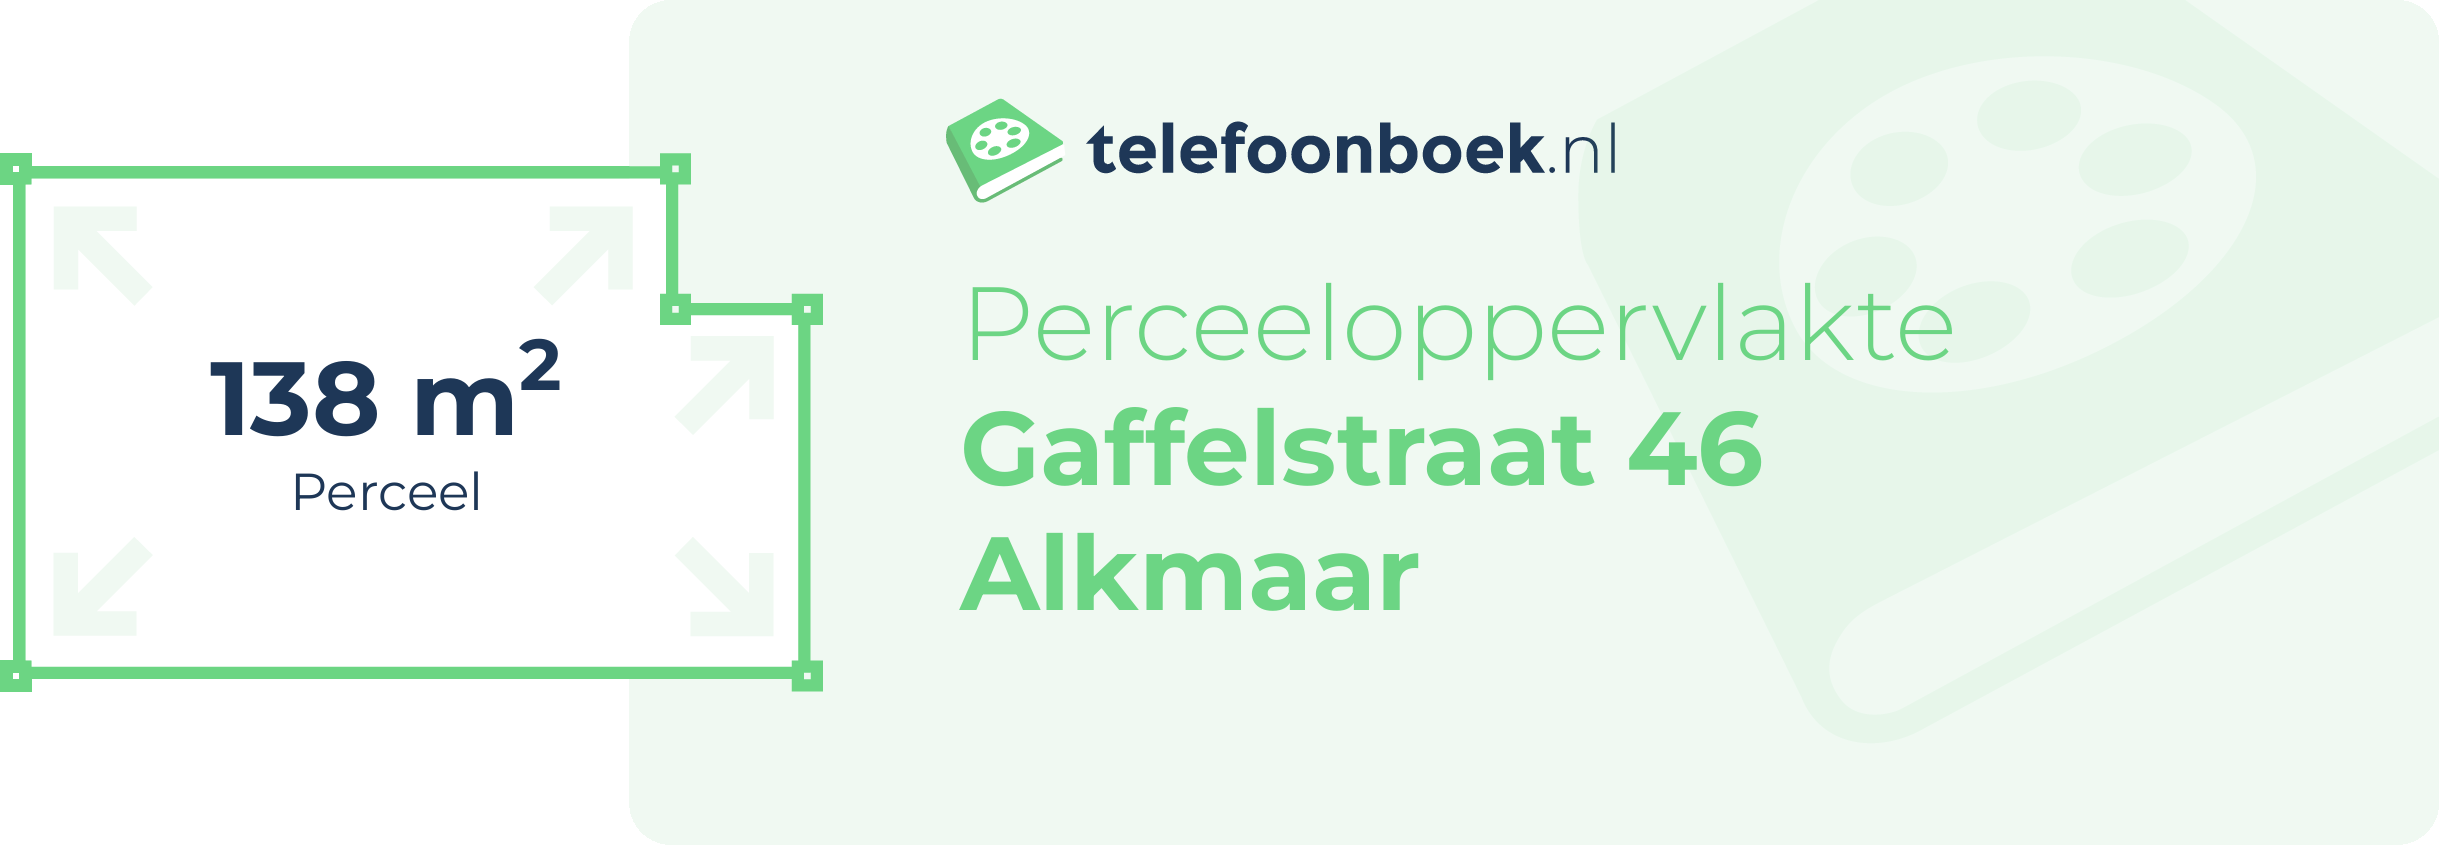 Perceeloppervlakte Gaffelstraat 46 Alkmaar